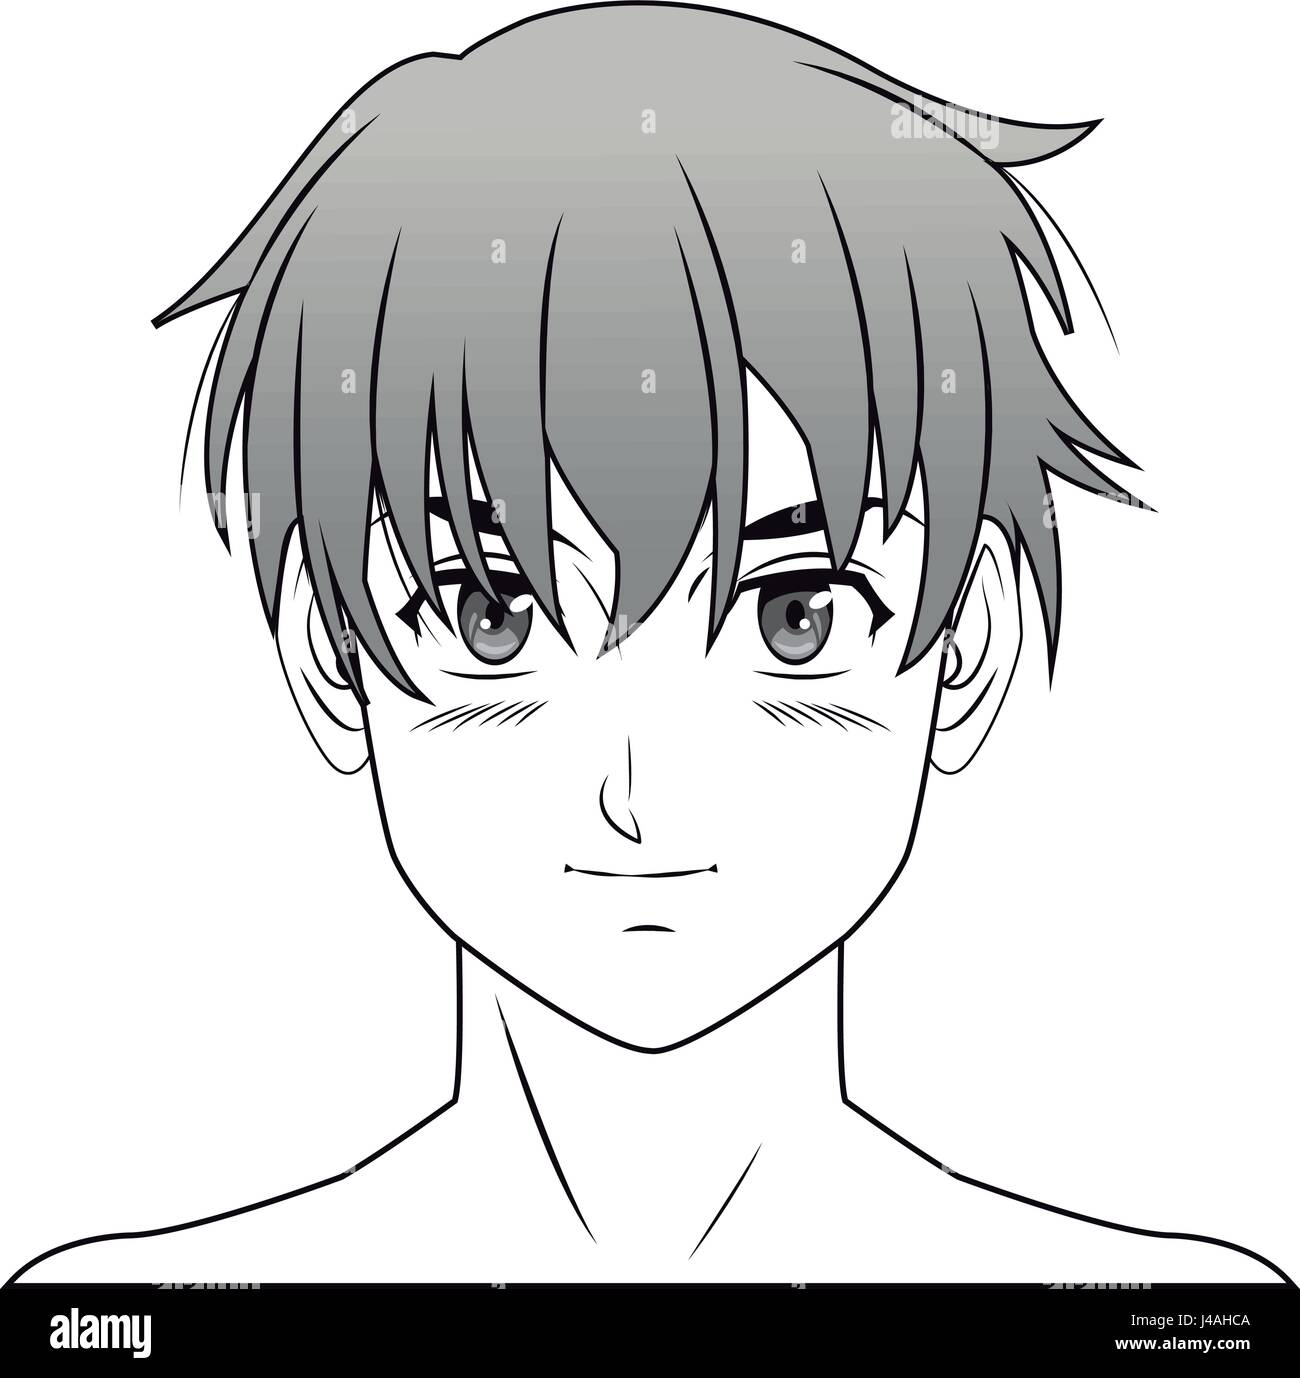 Anime boy or man cartoon icon